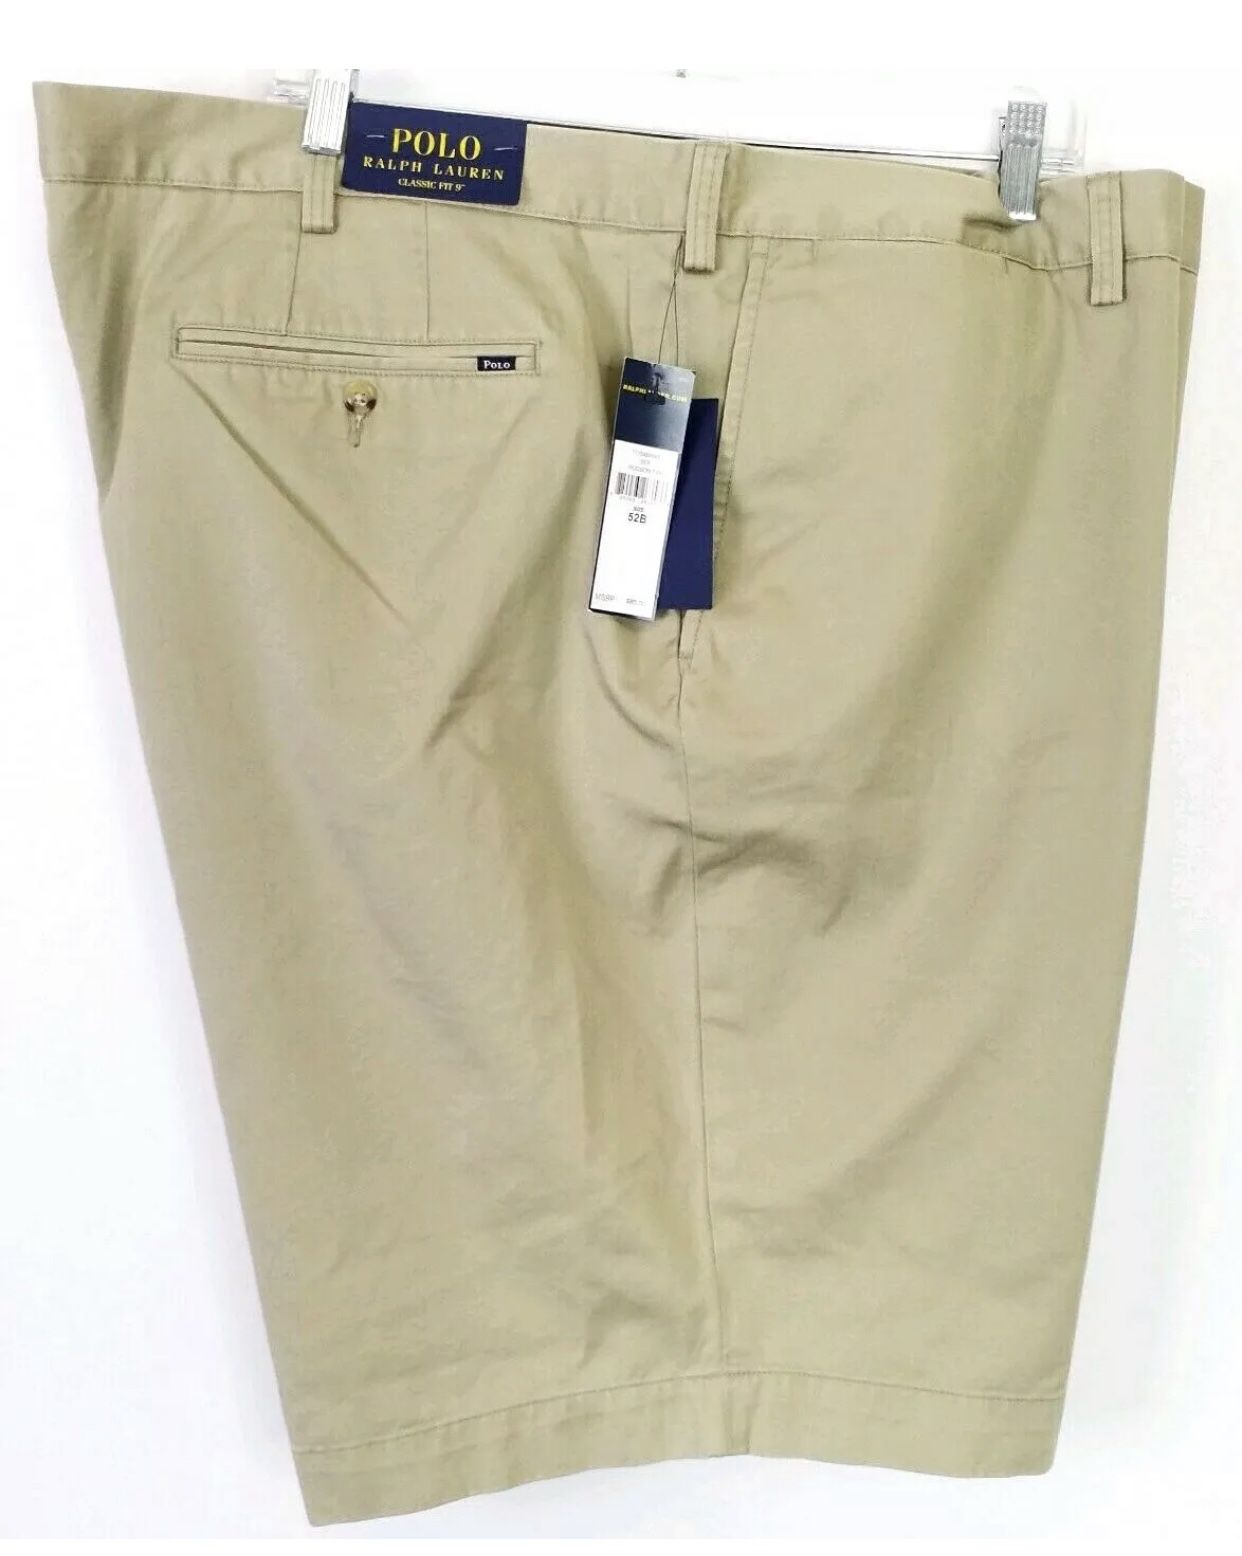 Polo Ralph Lauren Mens Size 52 Big Shorts Chino Classic Fit Hudson Tan New